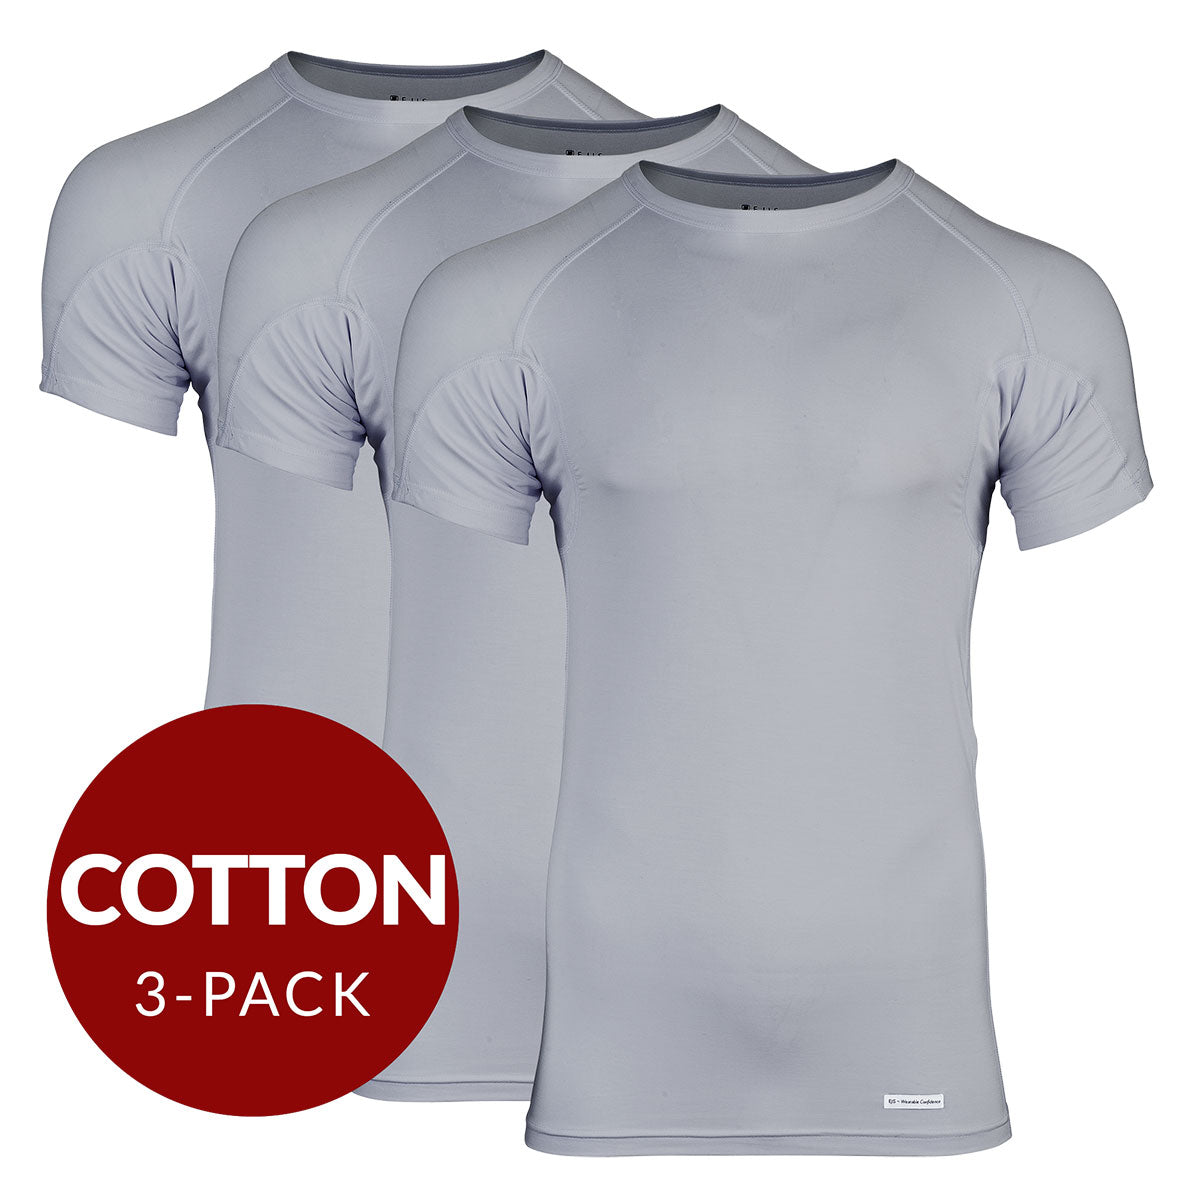 Crew Neck Cotton Sweat Proof Undershirt For Men - Grey 3-Pack - Ejis